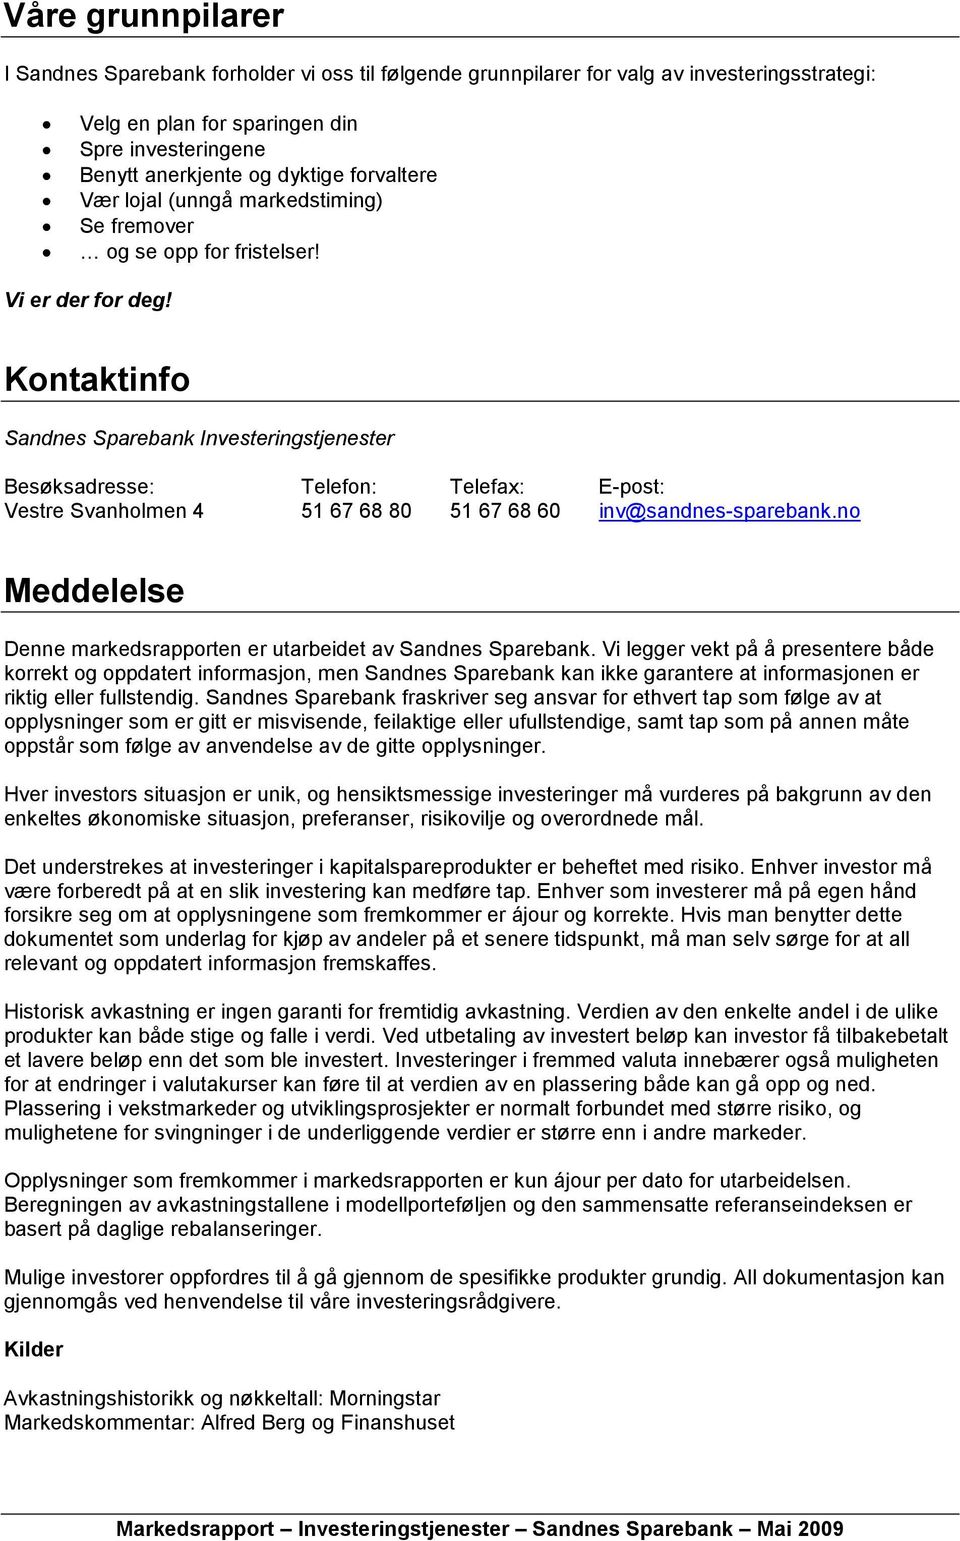 Kontaktinfo Sandnes Sparebank Investeringstjenester Besøksadresse: Telefon: Telefax: E-post: Vestre Svanholmen 4 51 67 68 80 51 67 68 60 inv@sandnes-sparebank.